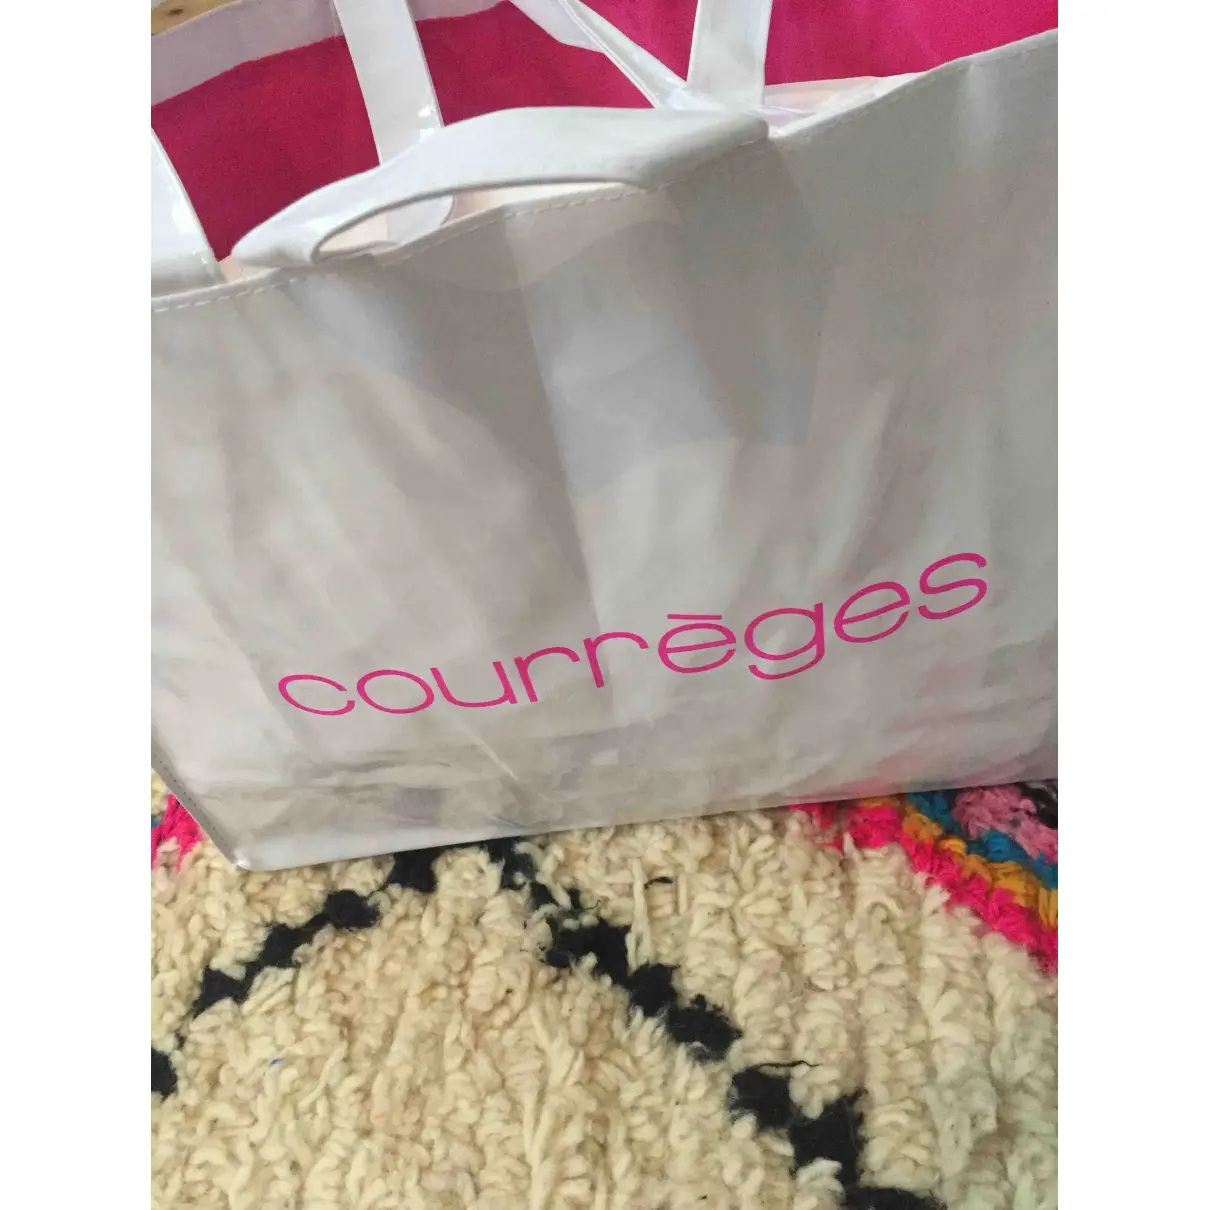 Buy Courrèges Handbag online